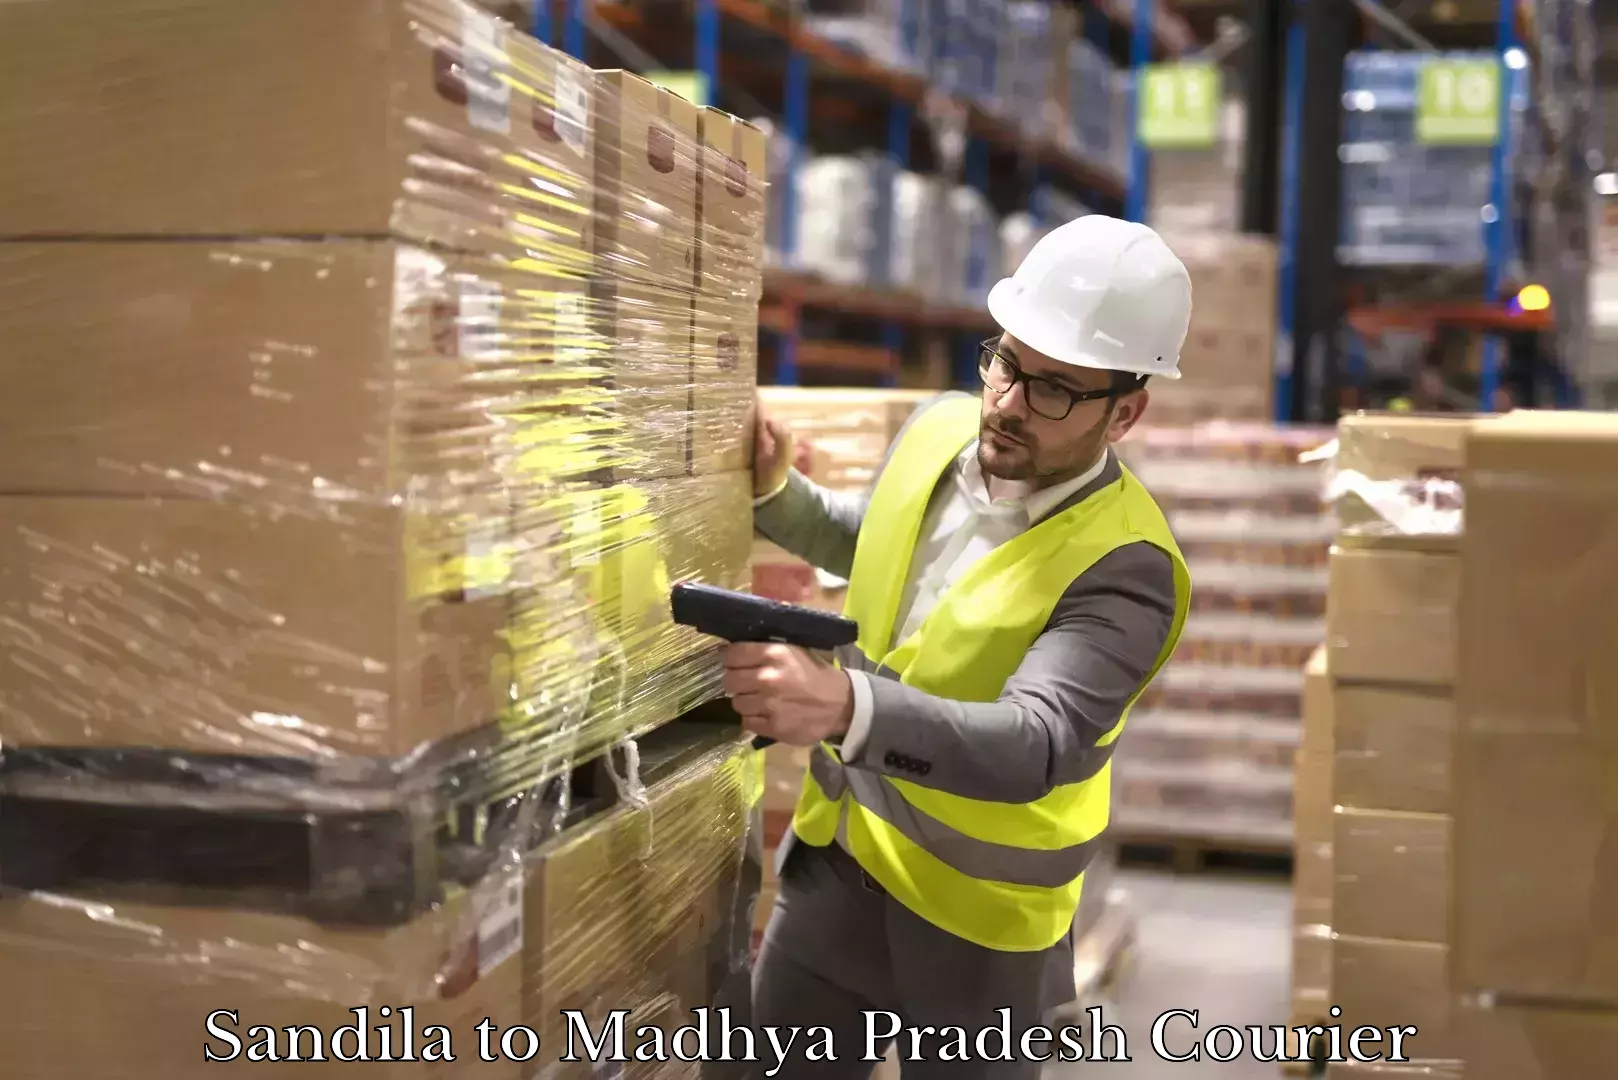 Package delivery network Sandila to Madhya Pradesh